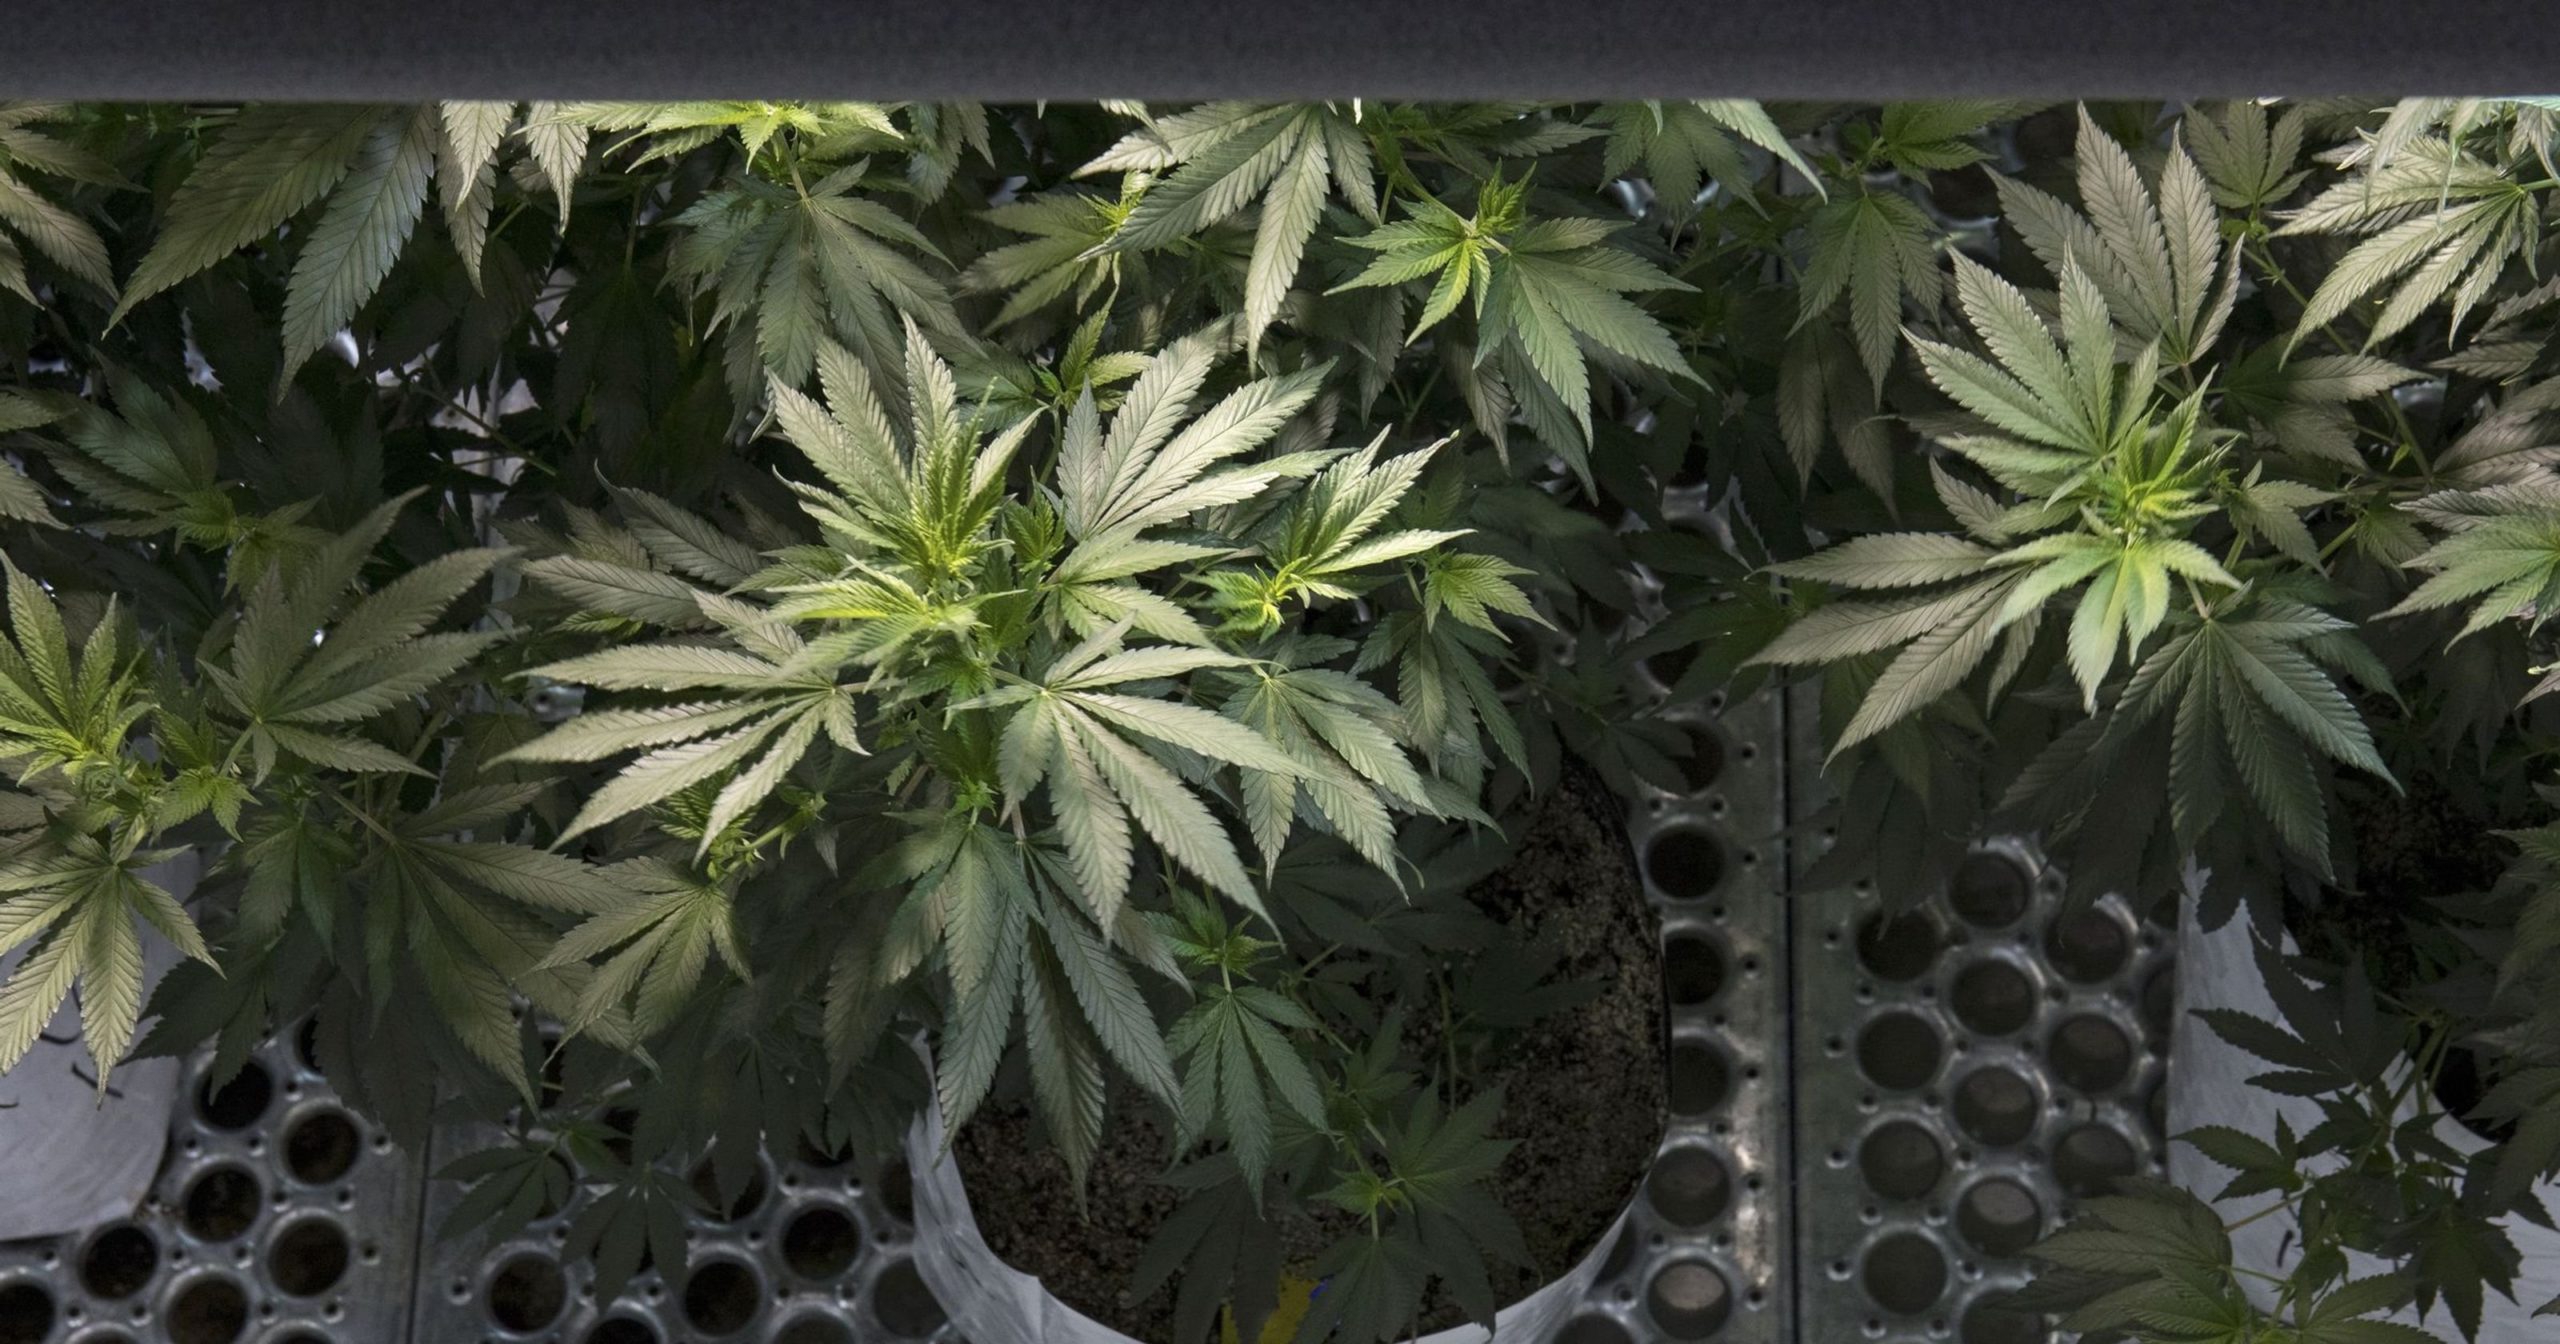 Marshall, Michigan is about to get 400 marijuana jobs